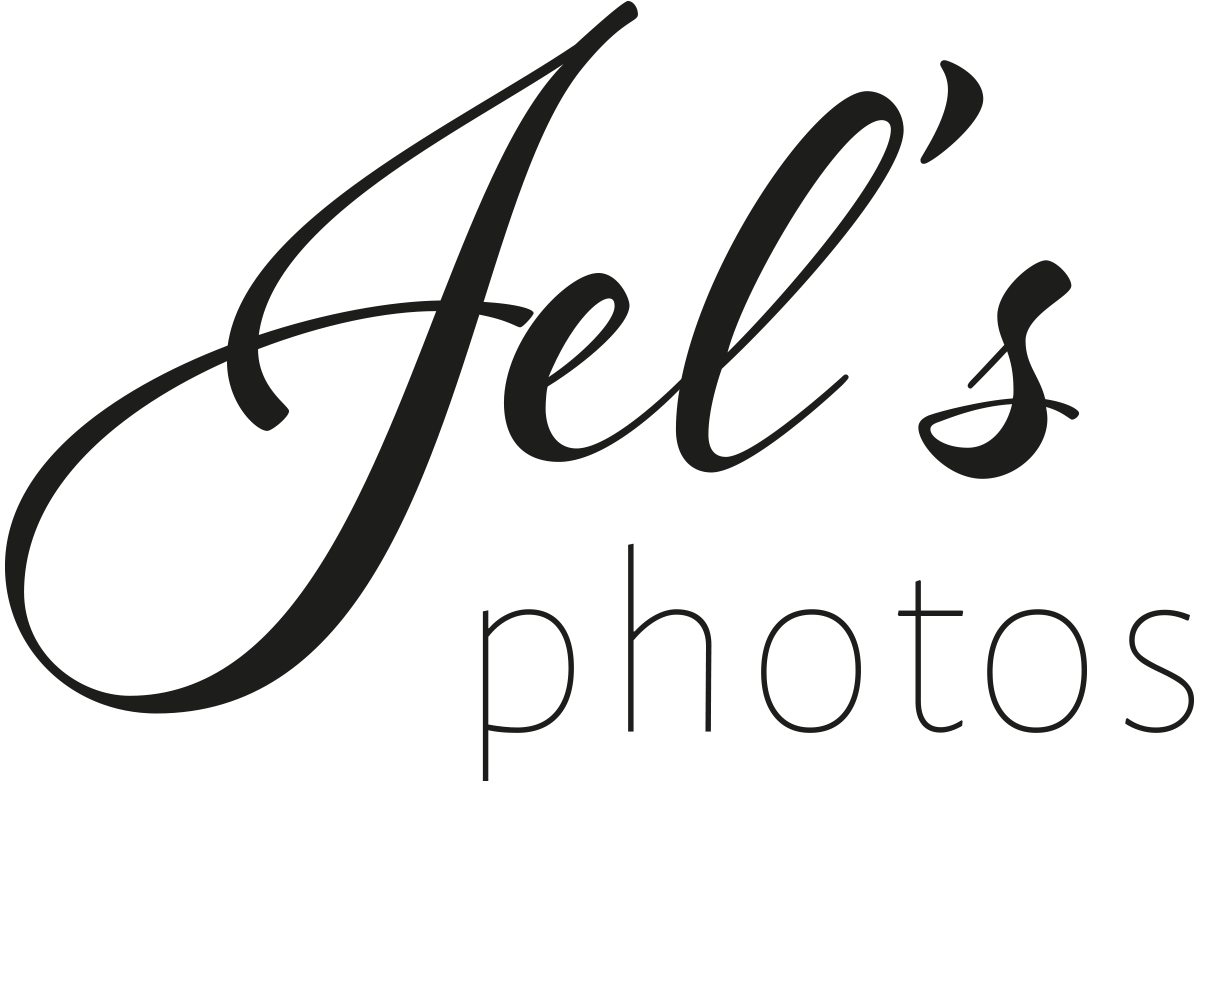 Jel's photos